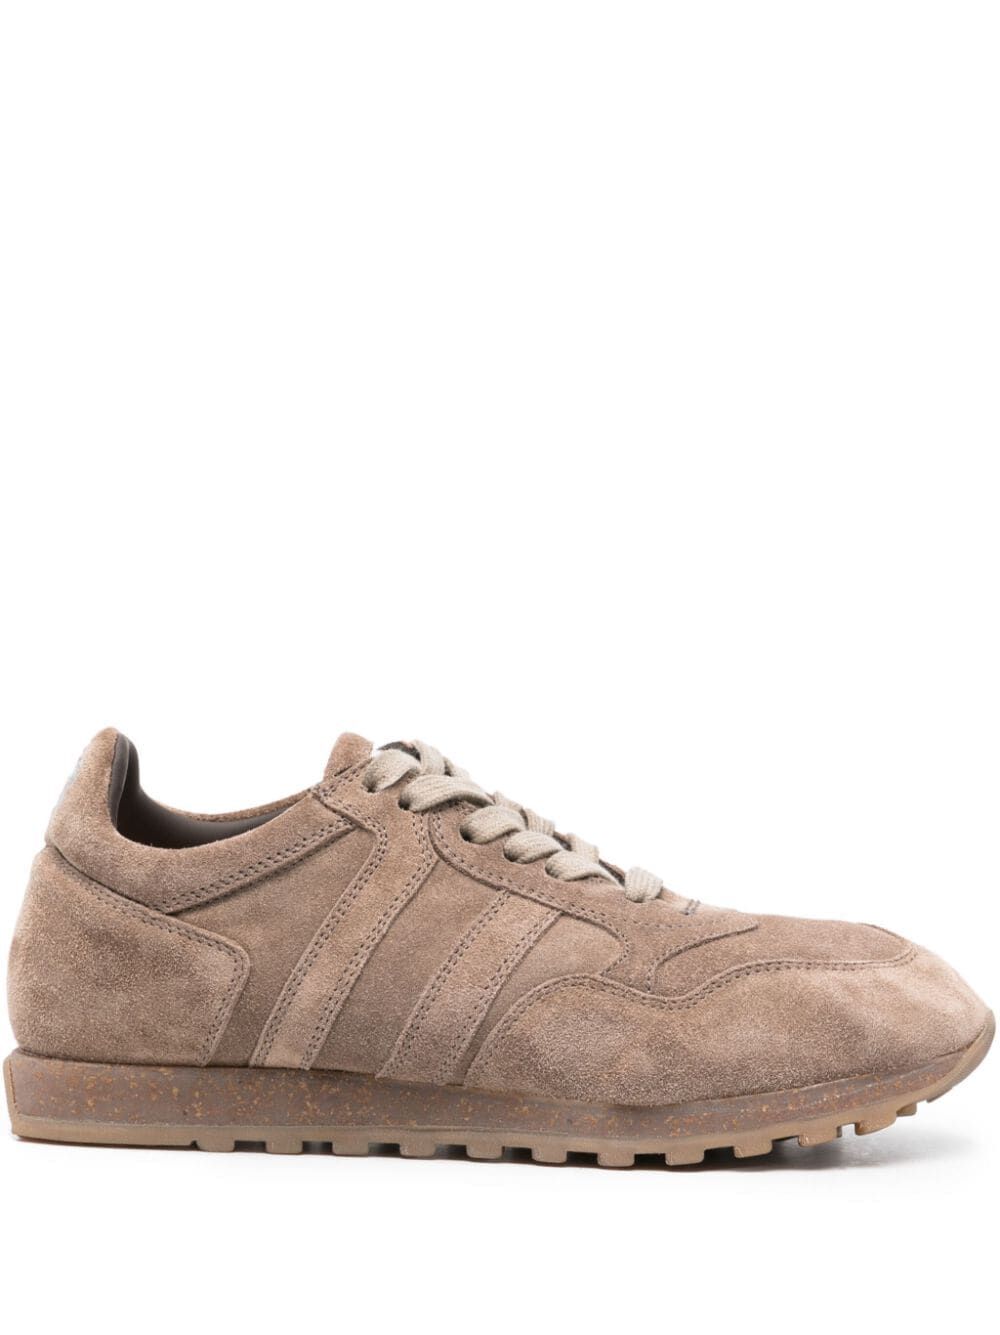 Alberto Fasciani Low-top Leather Sneakers In Brown